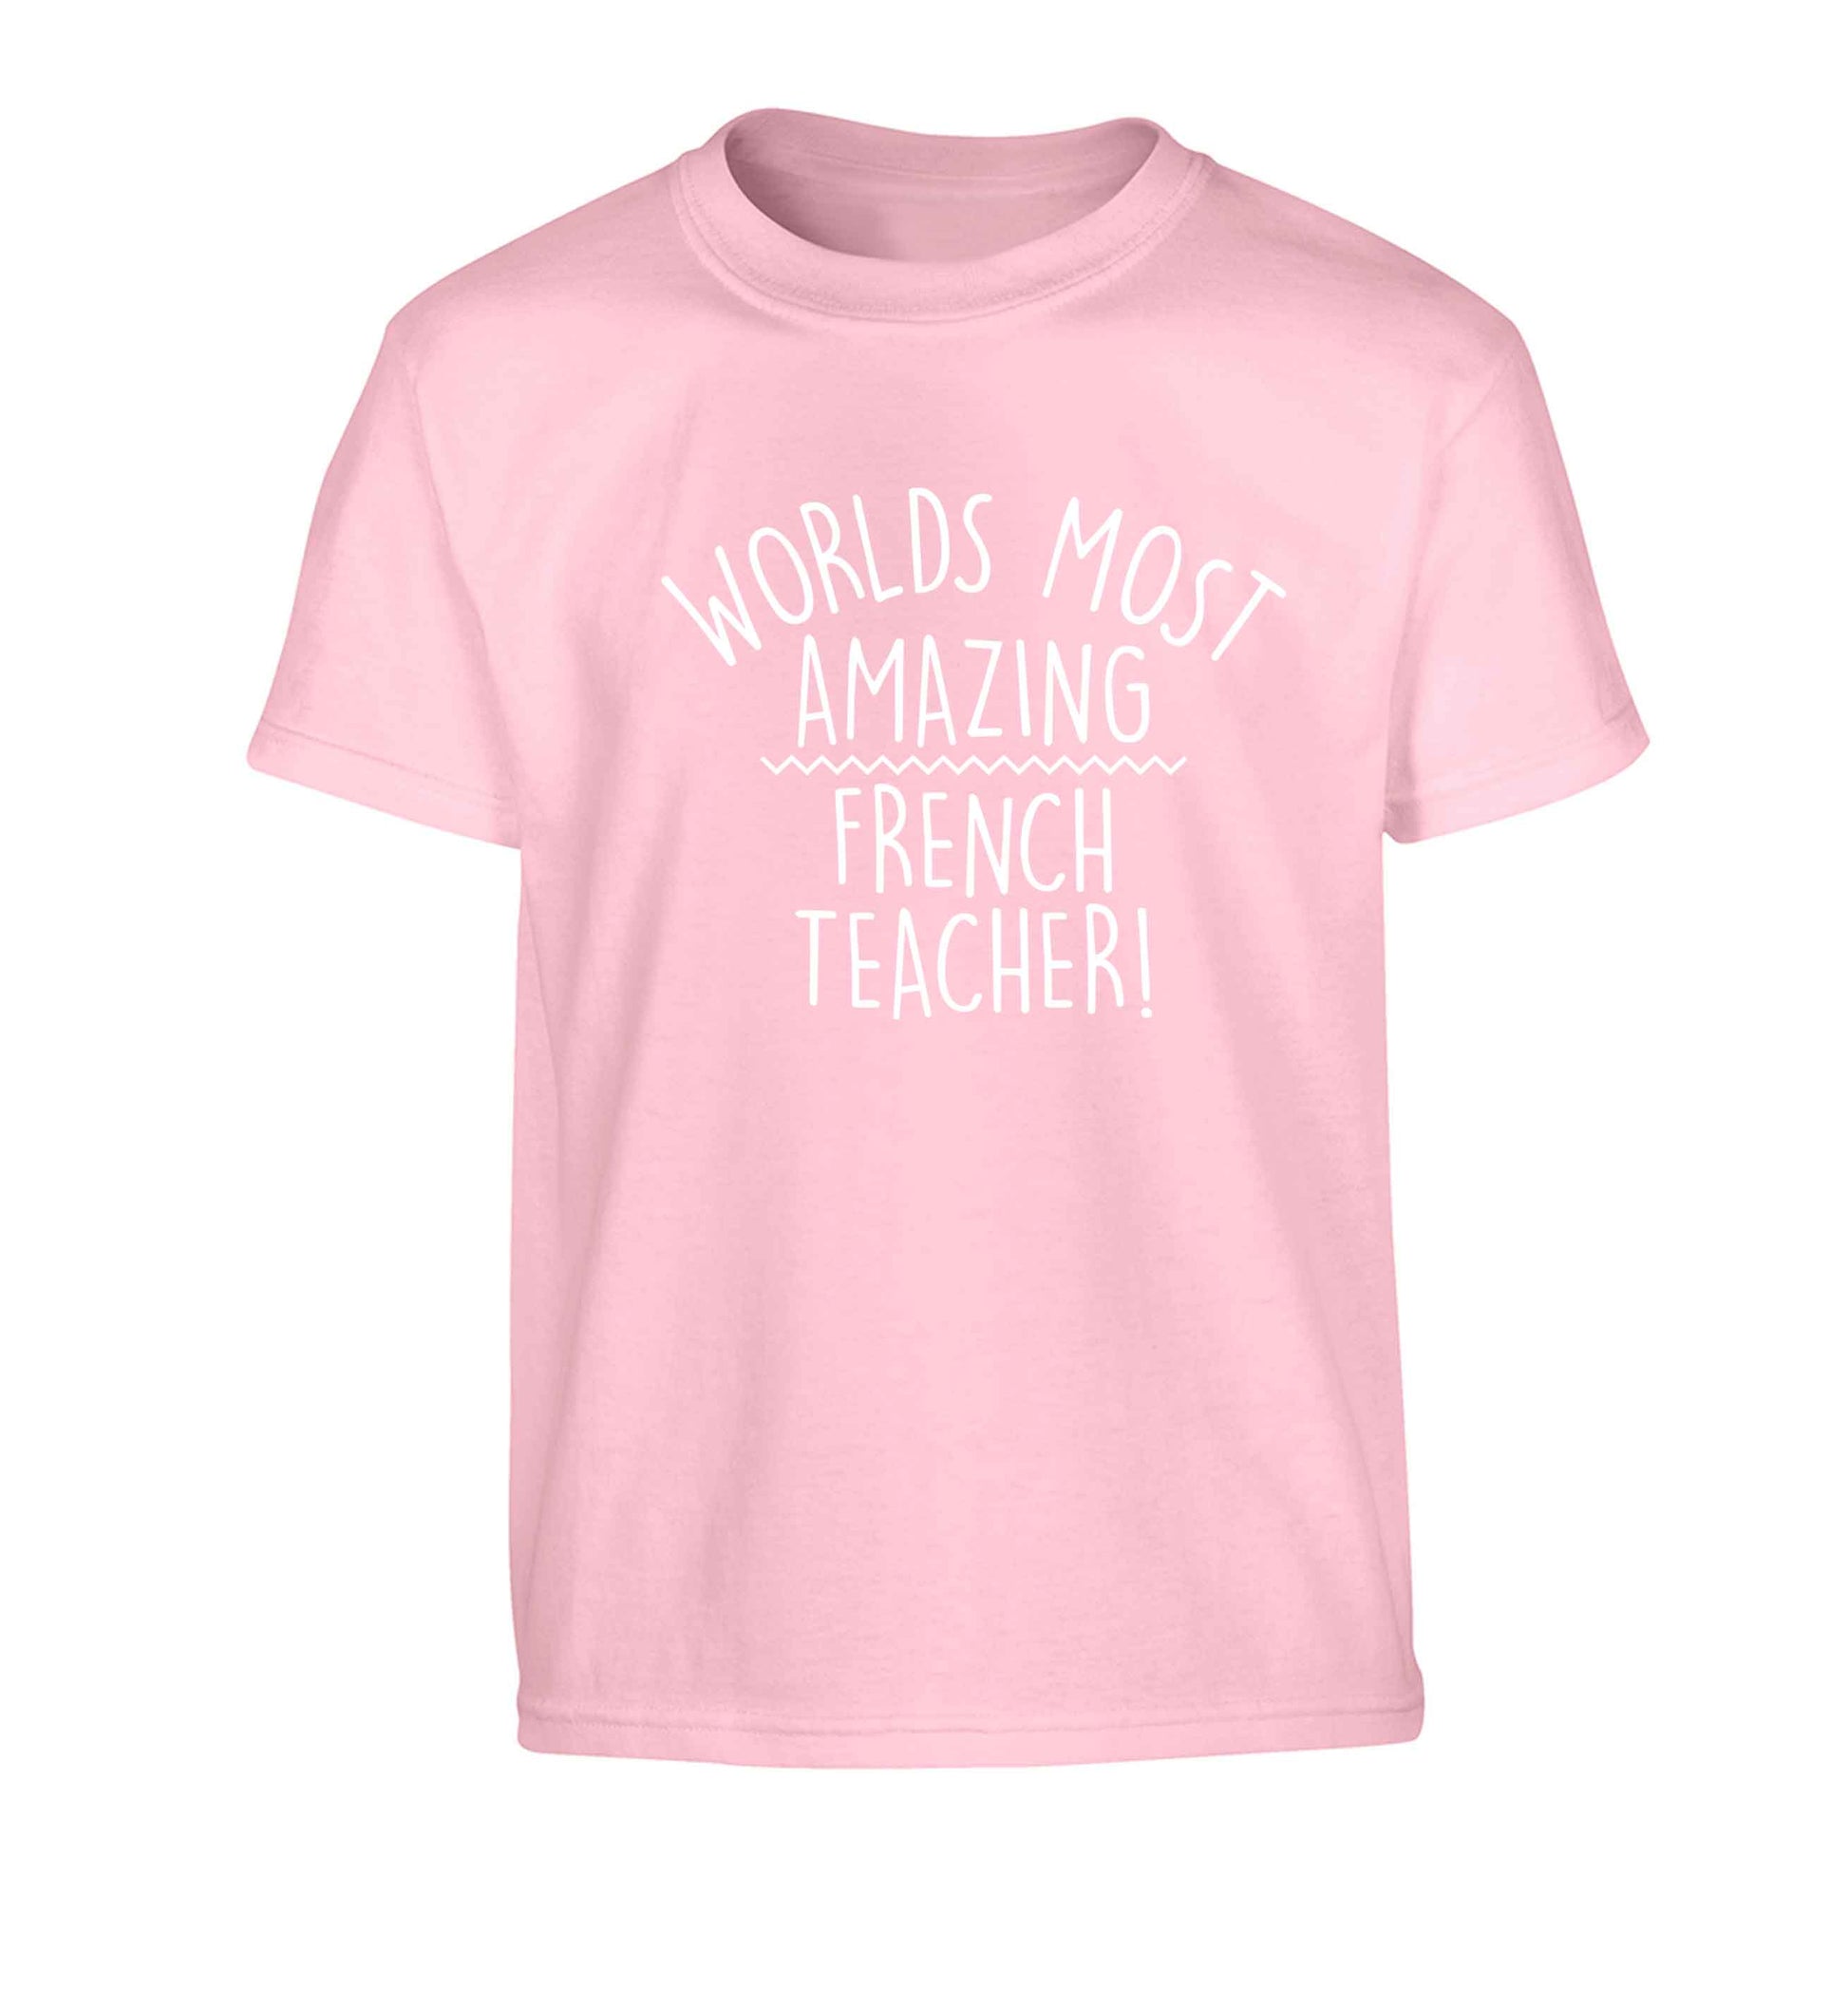 Worlds most amazing French teacher Children's light pink Tshirt 12-13 Years